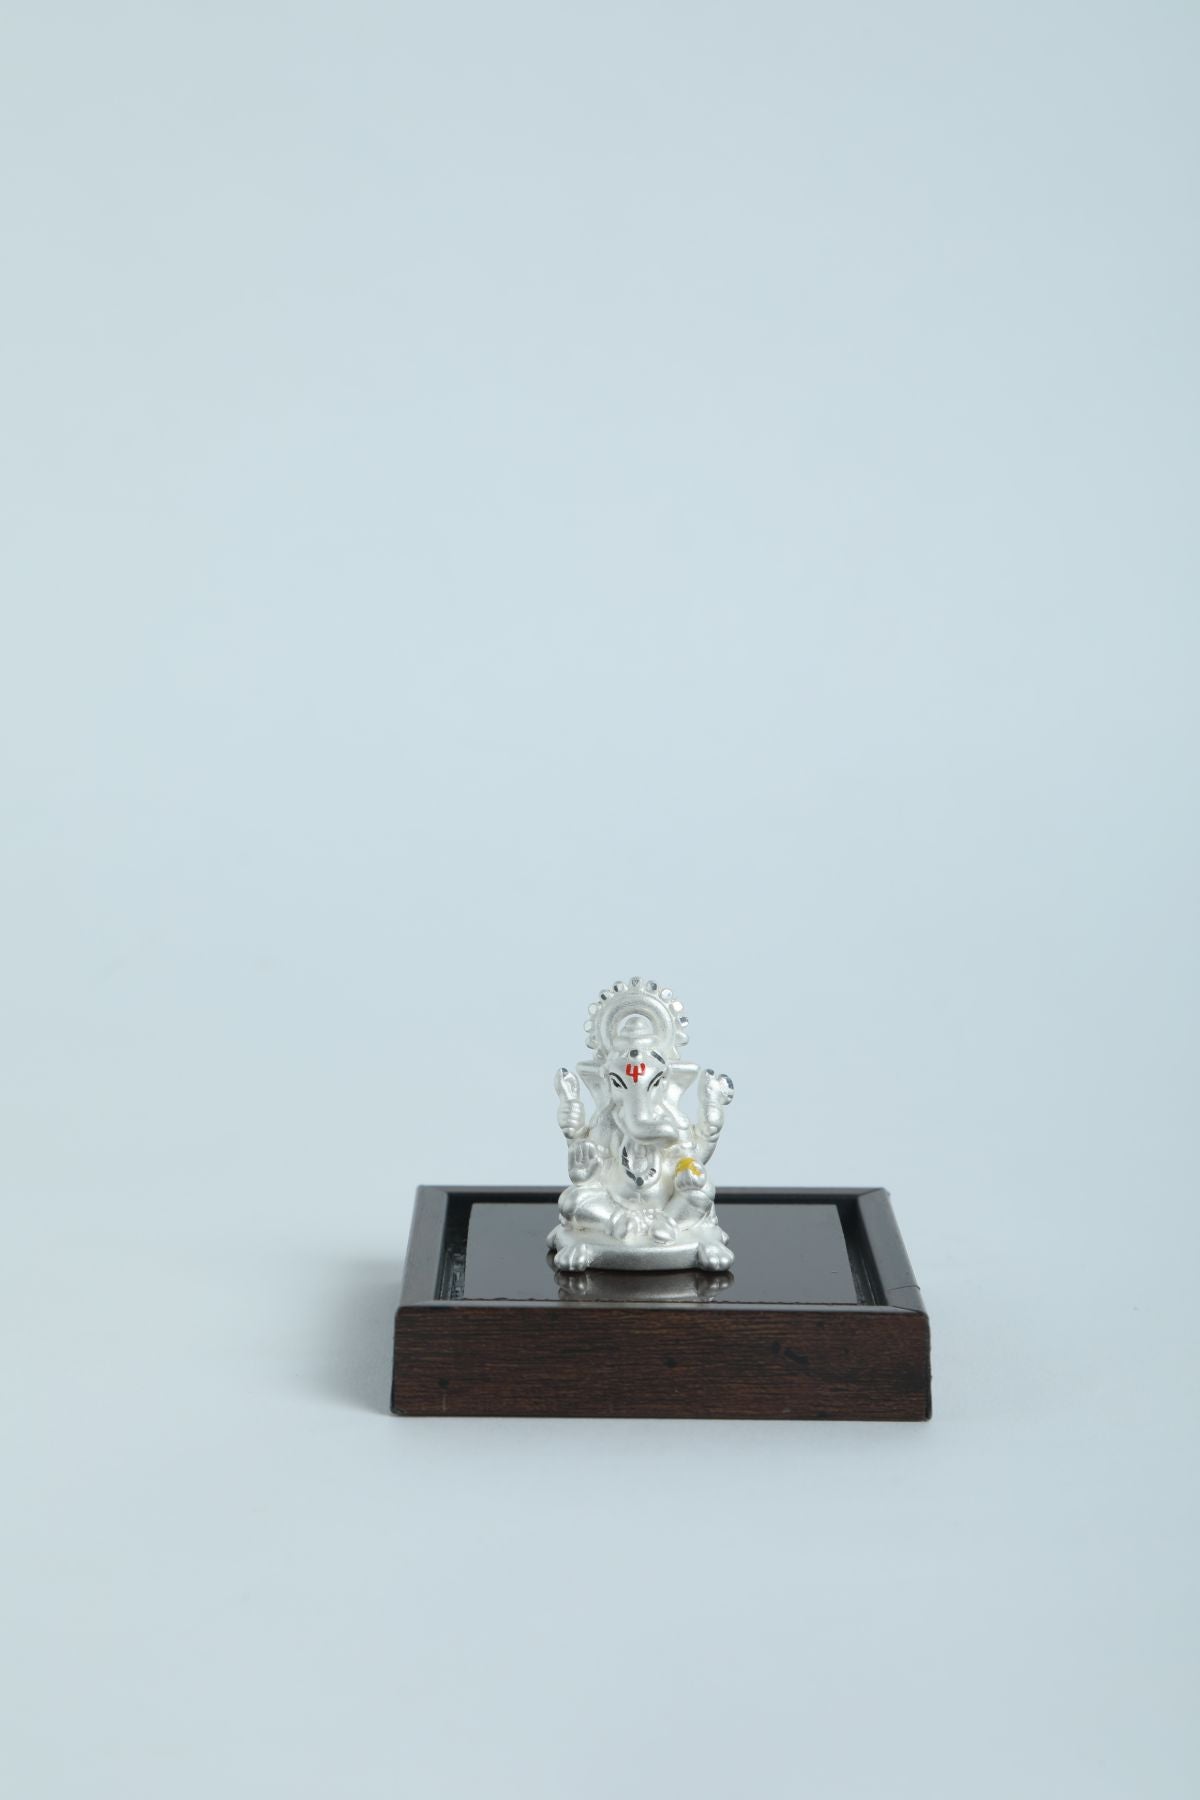 999 Pure Silver Ganesha Idol By Krysaliis Isvara - Krign_Ms07 Idols